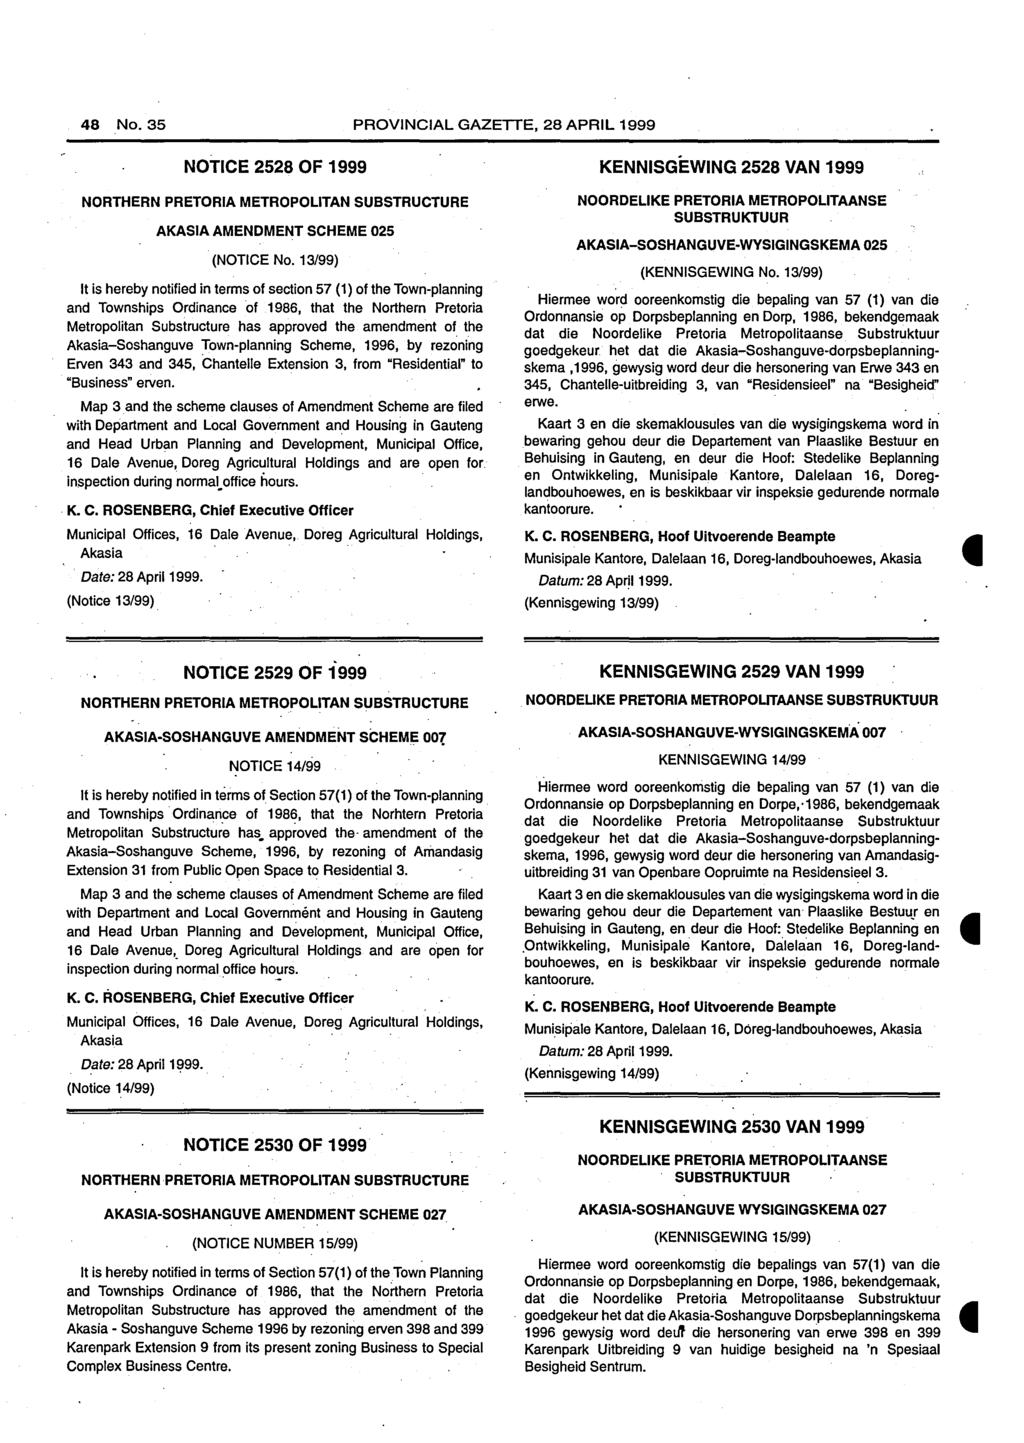 48 No. 35 PROVINCIAL GAZETTE, 28 APRIL 1999 NOTICE 2528 OF 1999 NORTHERN PRETORIA METROPOLITAN SUBSTRUCTURE AKASIA AMENDMENT SCHEME 025 (NOTICE No.